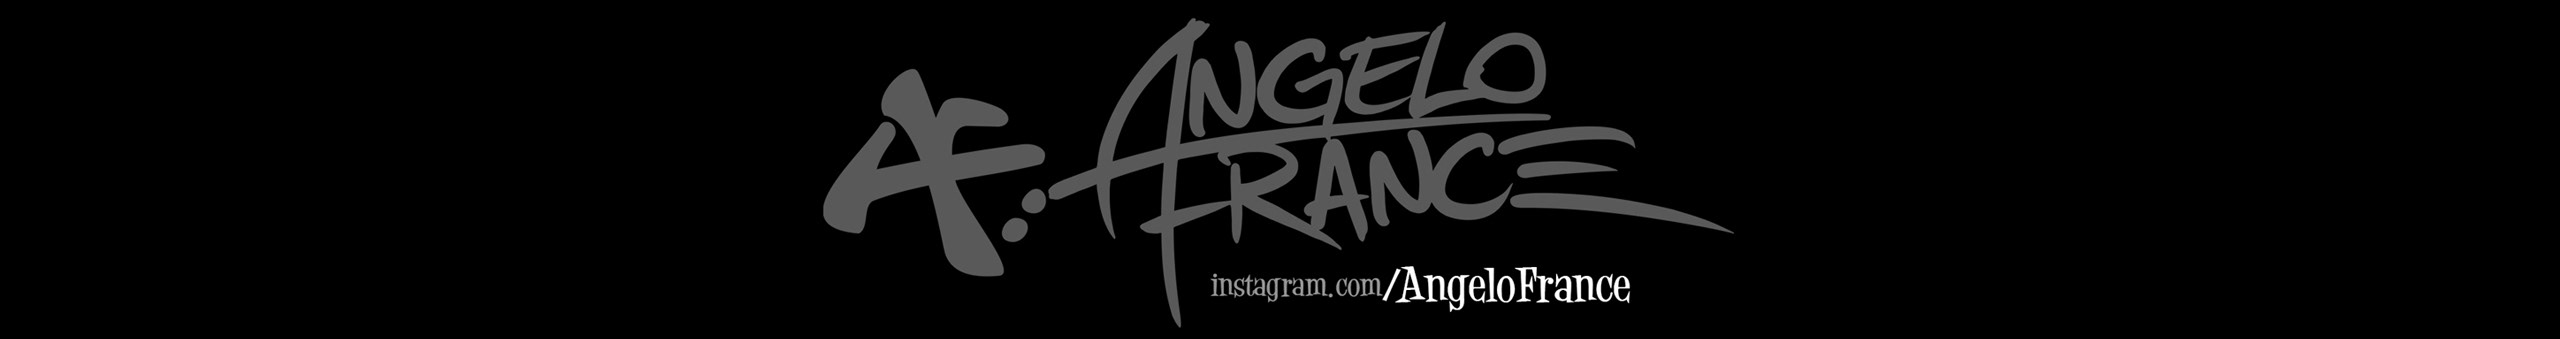 Angelo France's profile banner